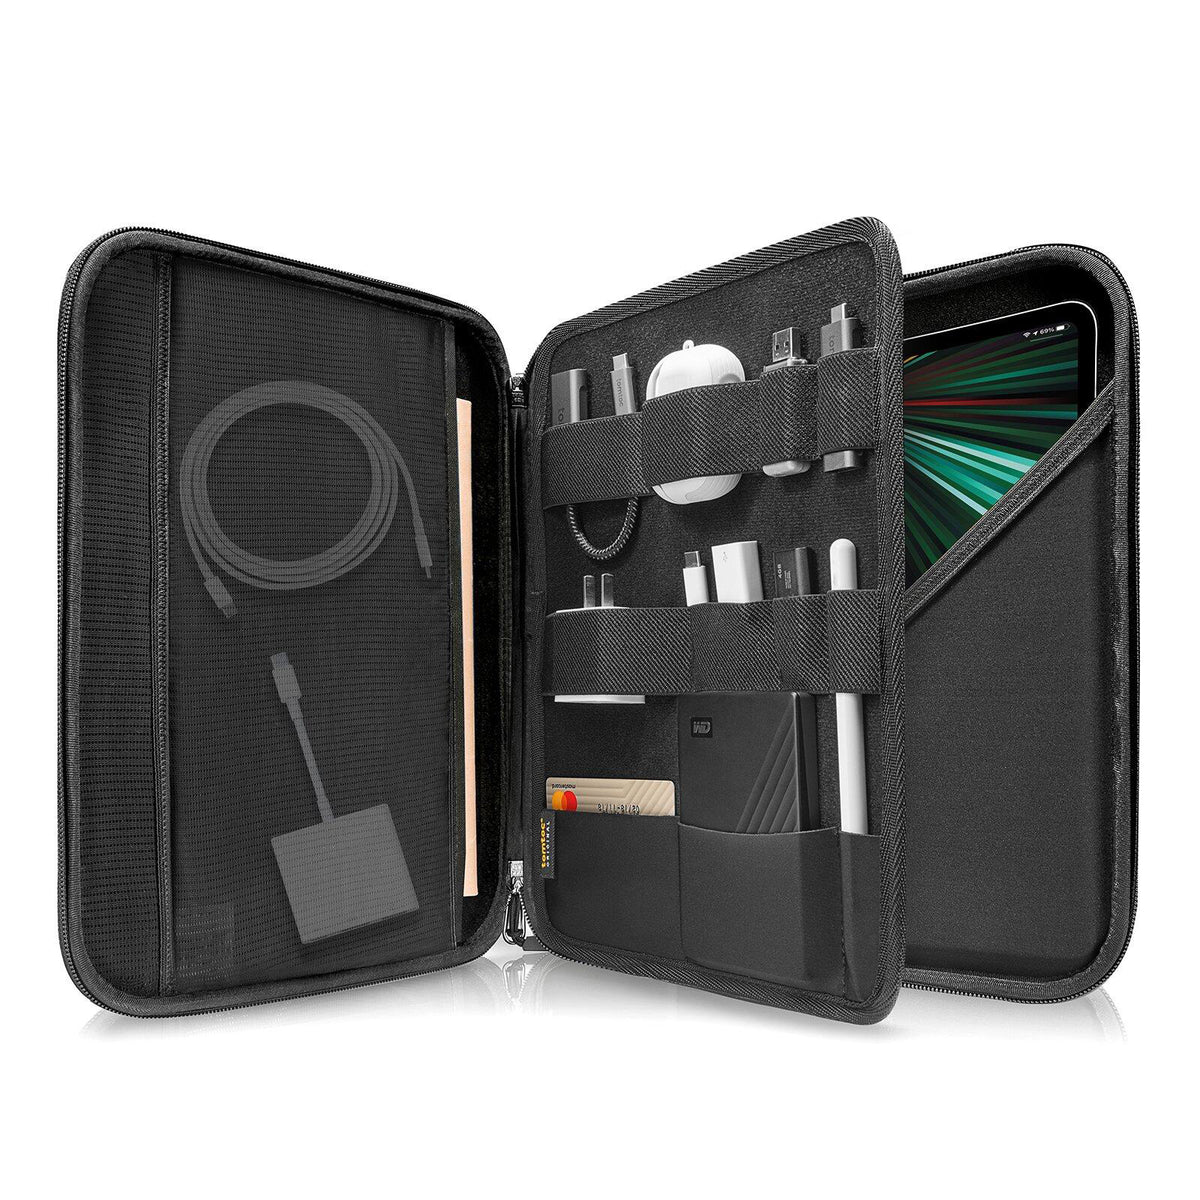 tomtoc 12.9 Inch Tablet Padfolio Eva Case - Mixed Orange